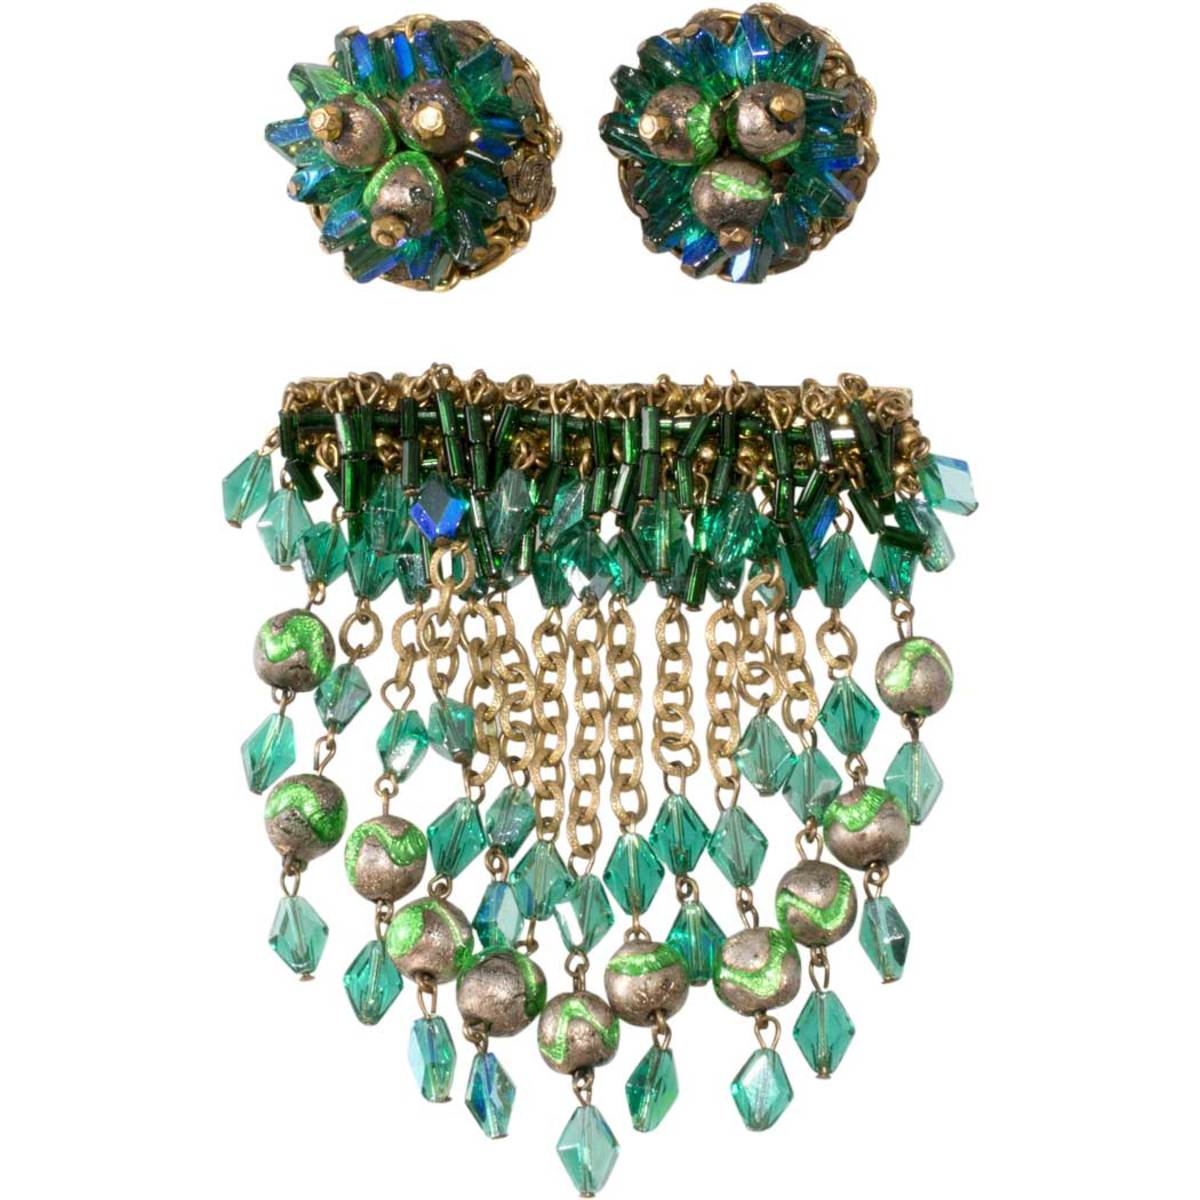 Hobé art glass bead brooch and earrings set